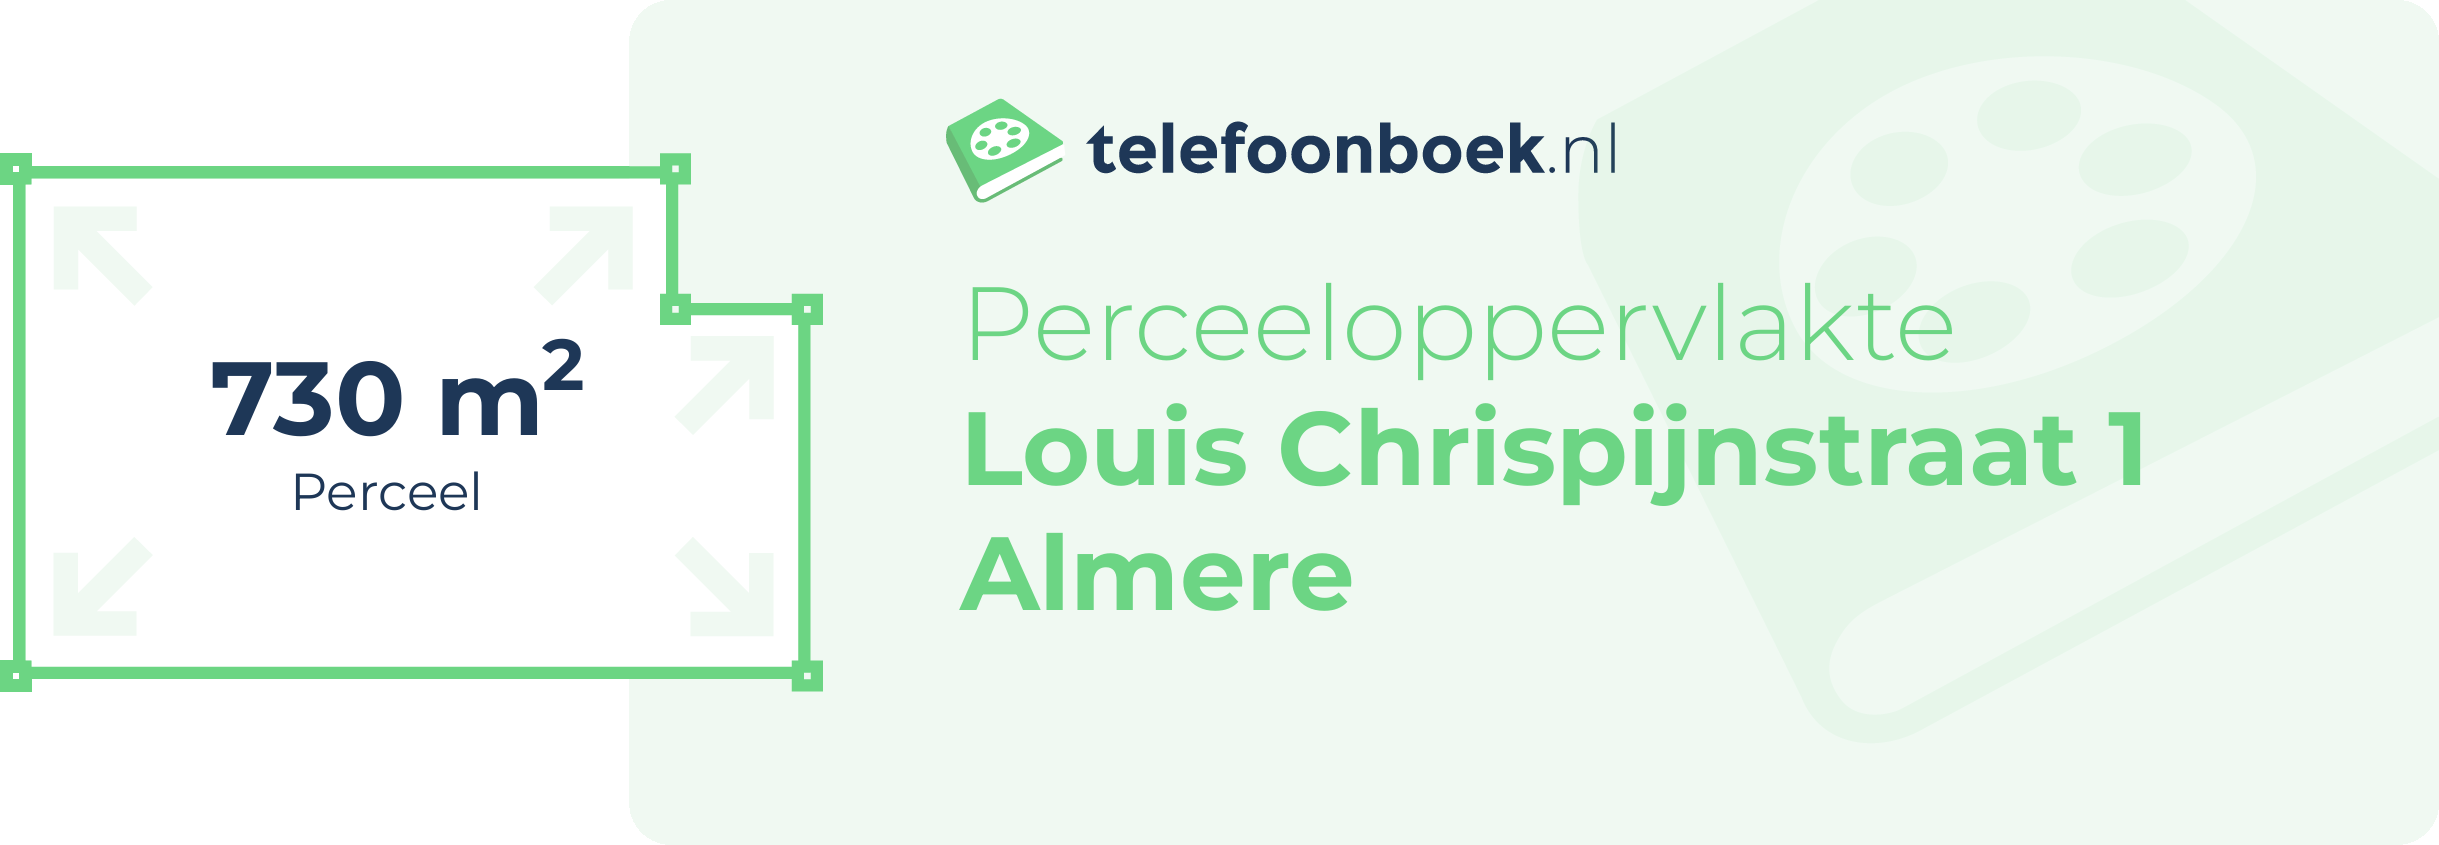 Perceeloppervlakte Louis Chrispijnstraat 1 Almere